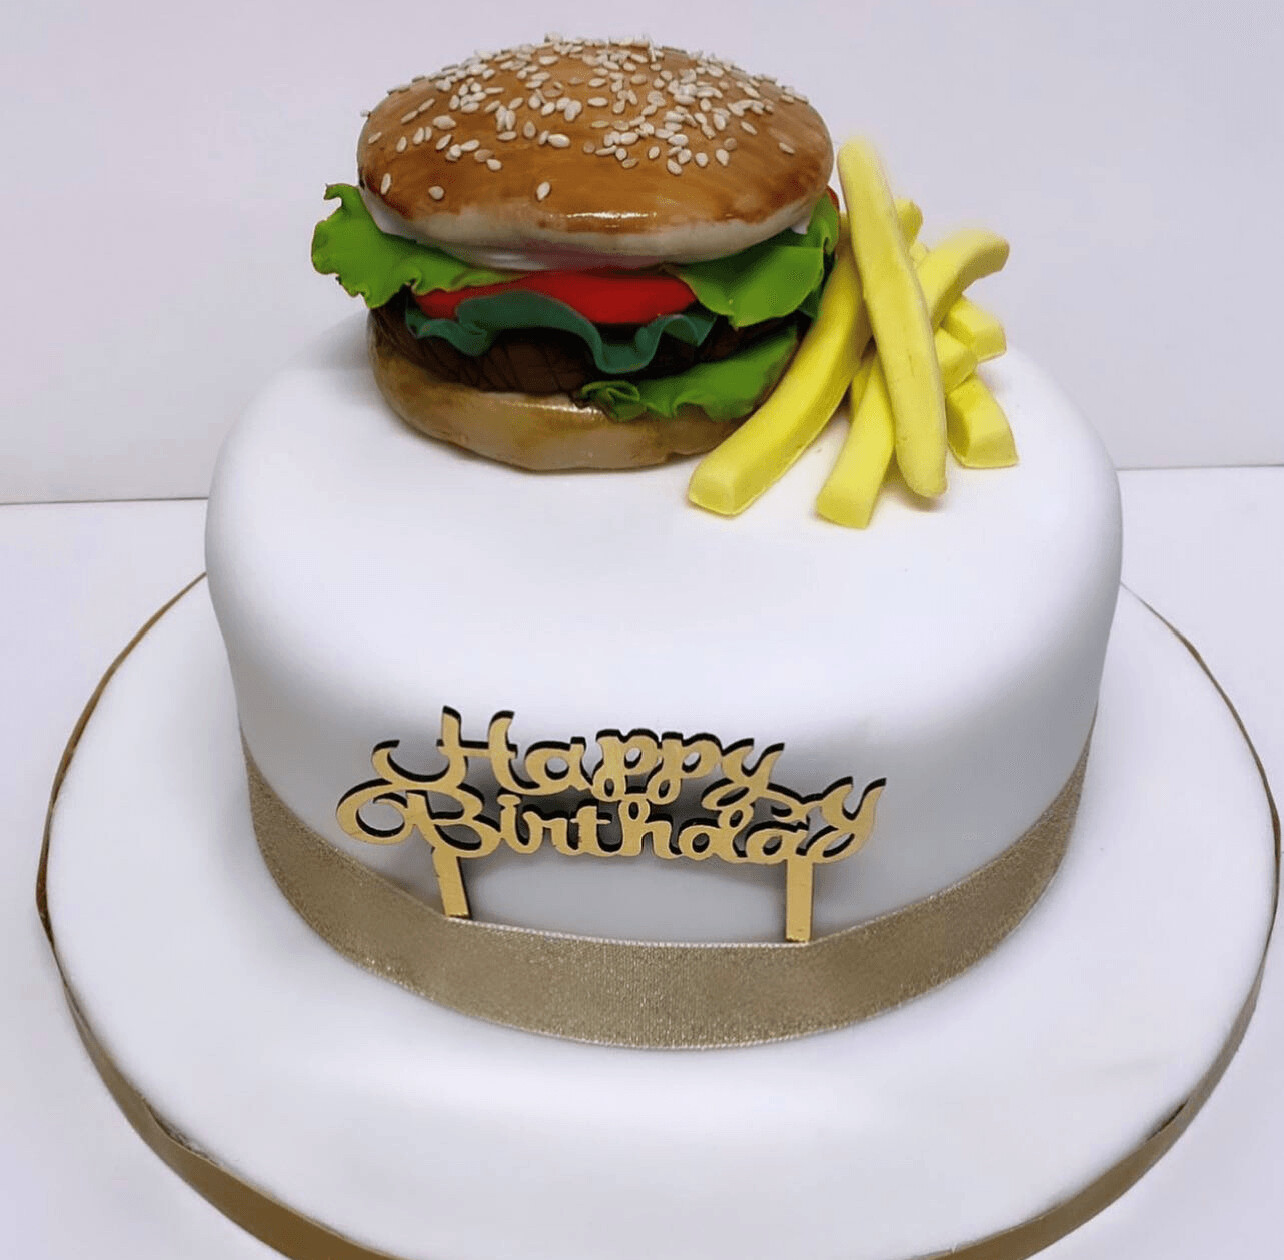 BURGER CAKE | How to make a hamburger cake! | By MetDaan CakesFacebook